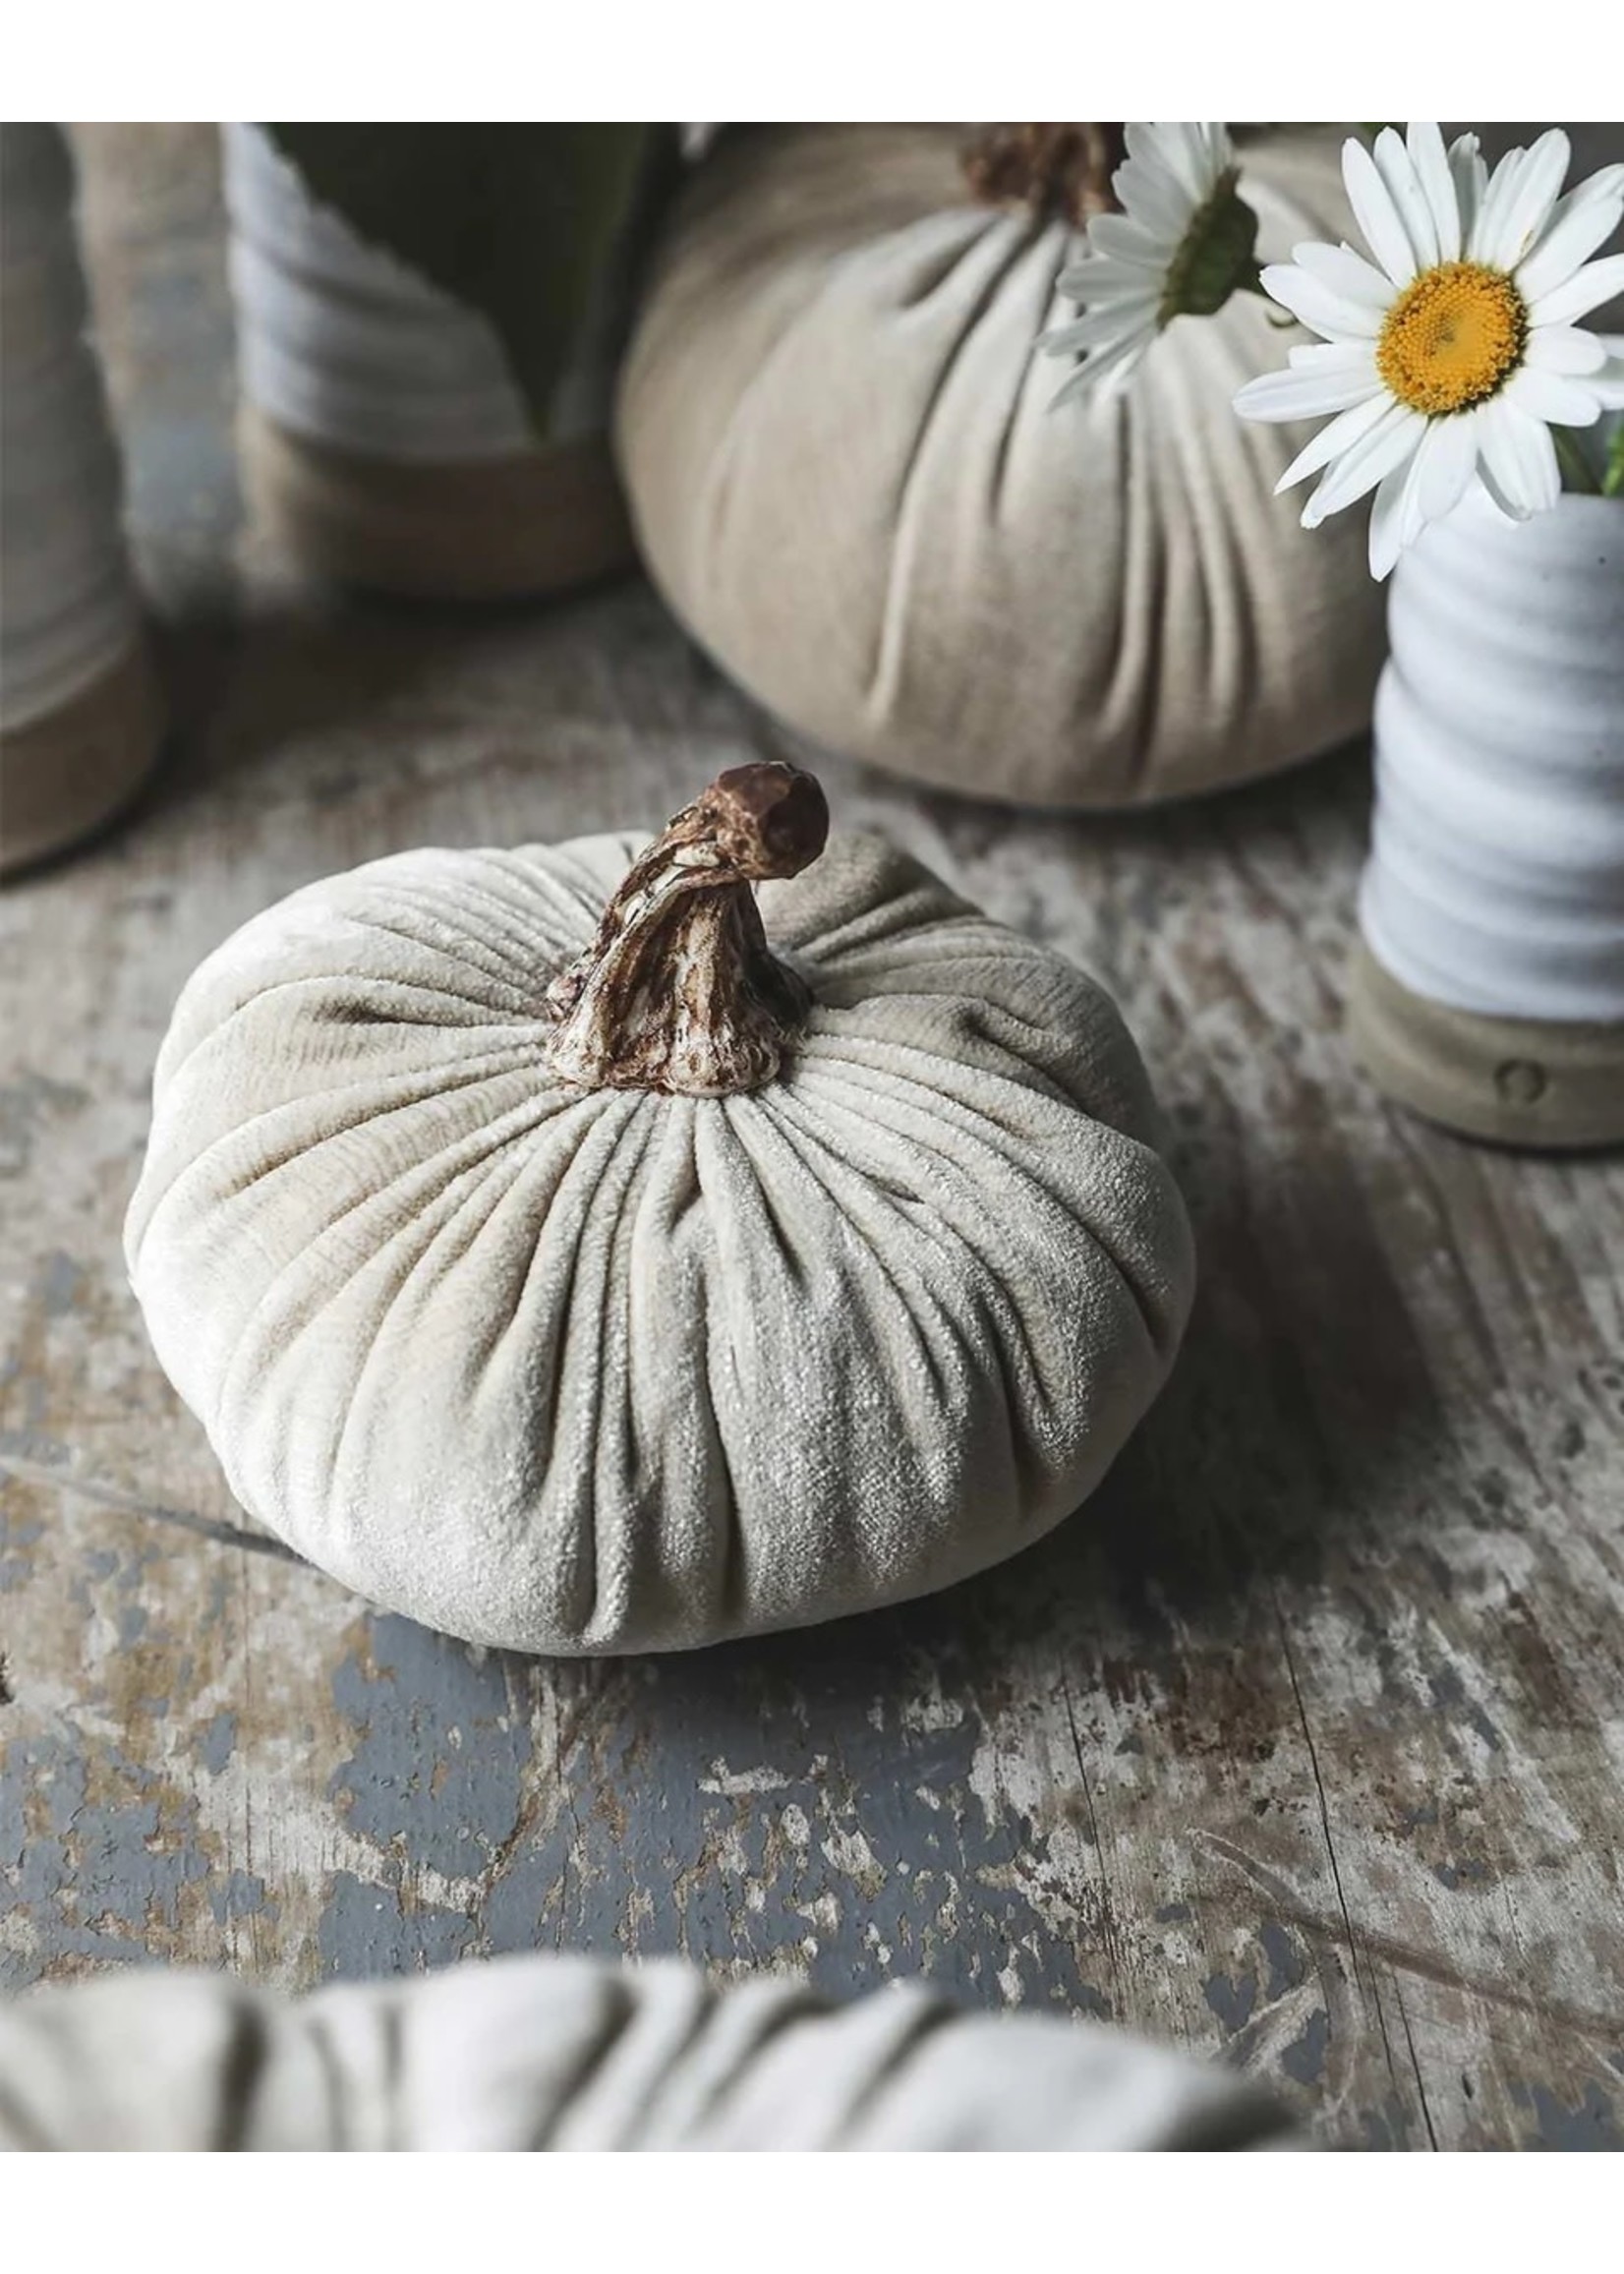 Farmhouse Pottery Harvest Pumpkin - Natural Small